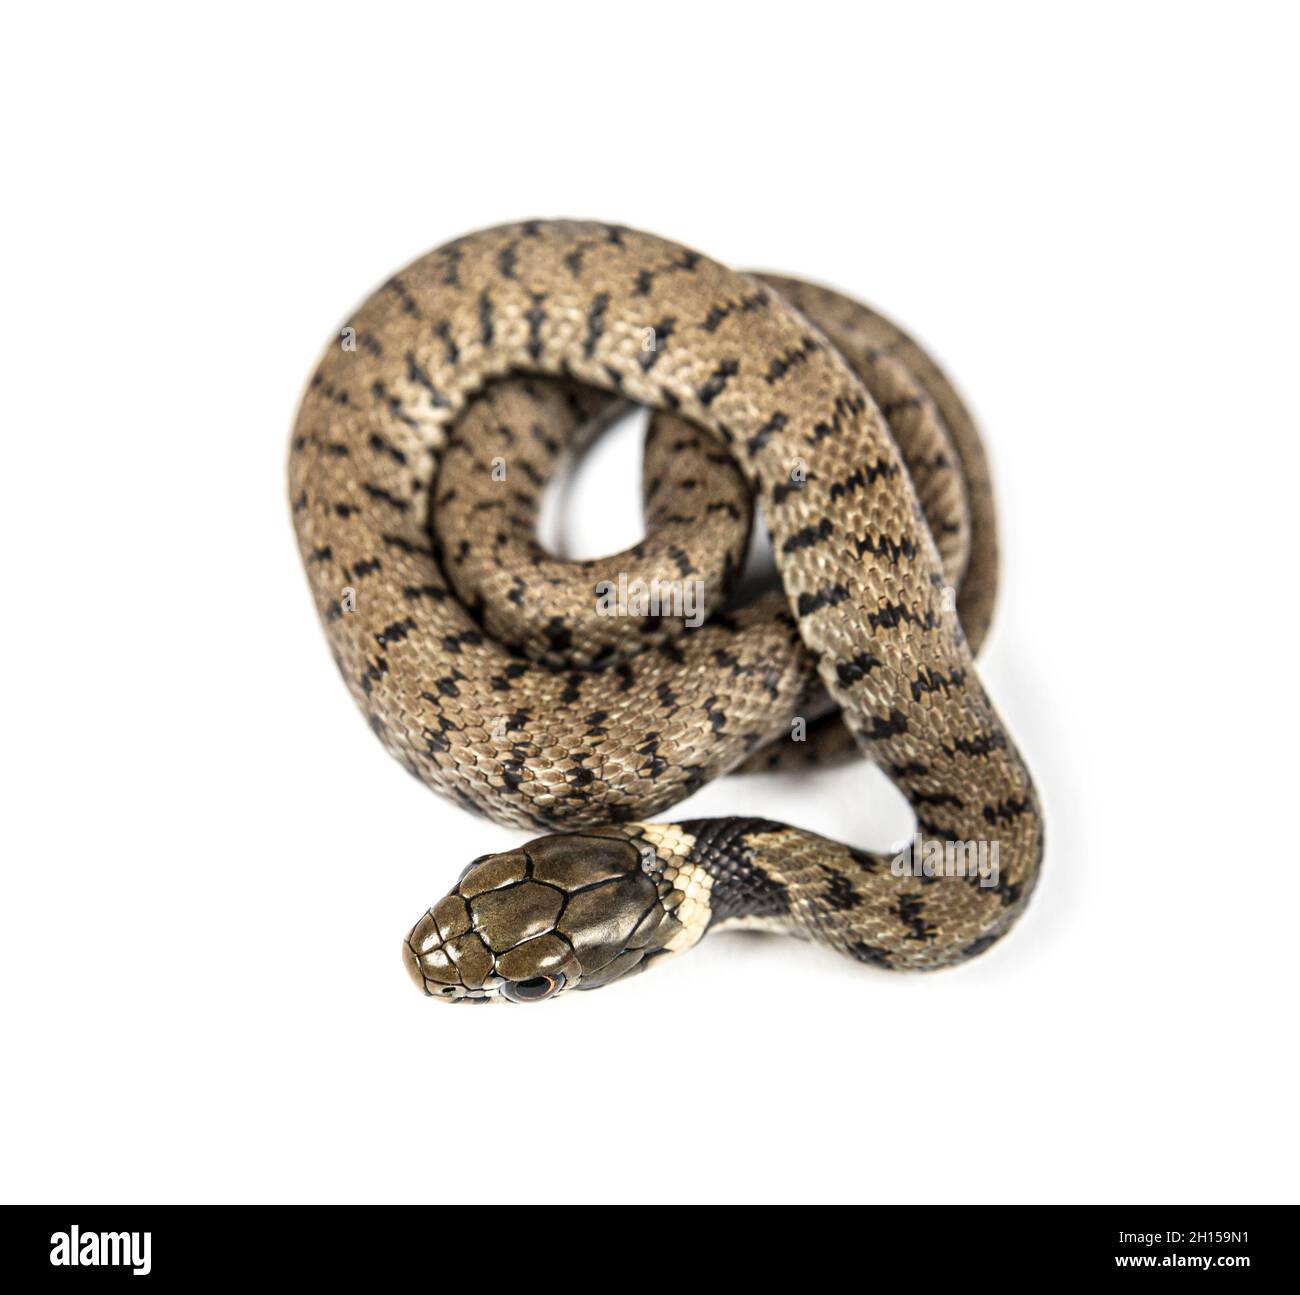 Grass snake, Natrix natrix, Isolated on white Stock Photo